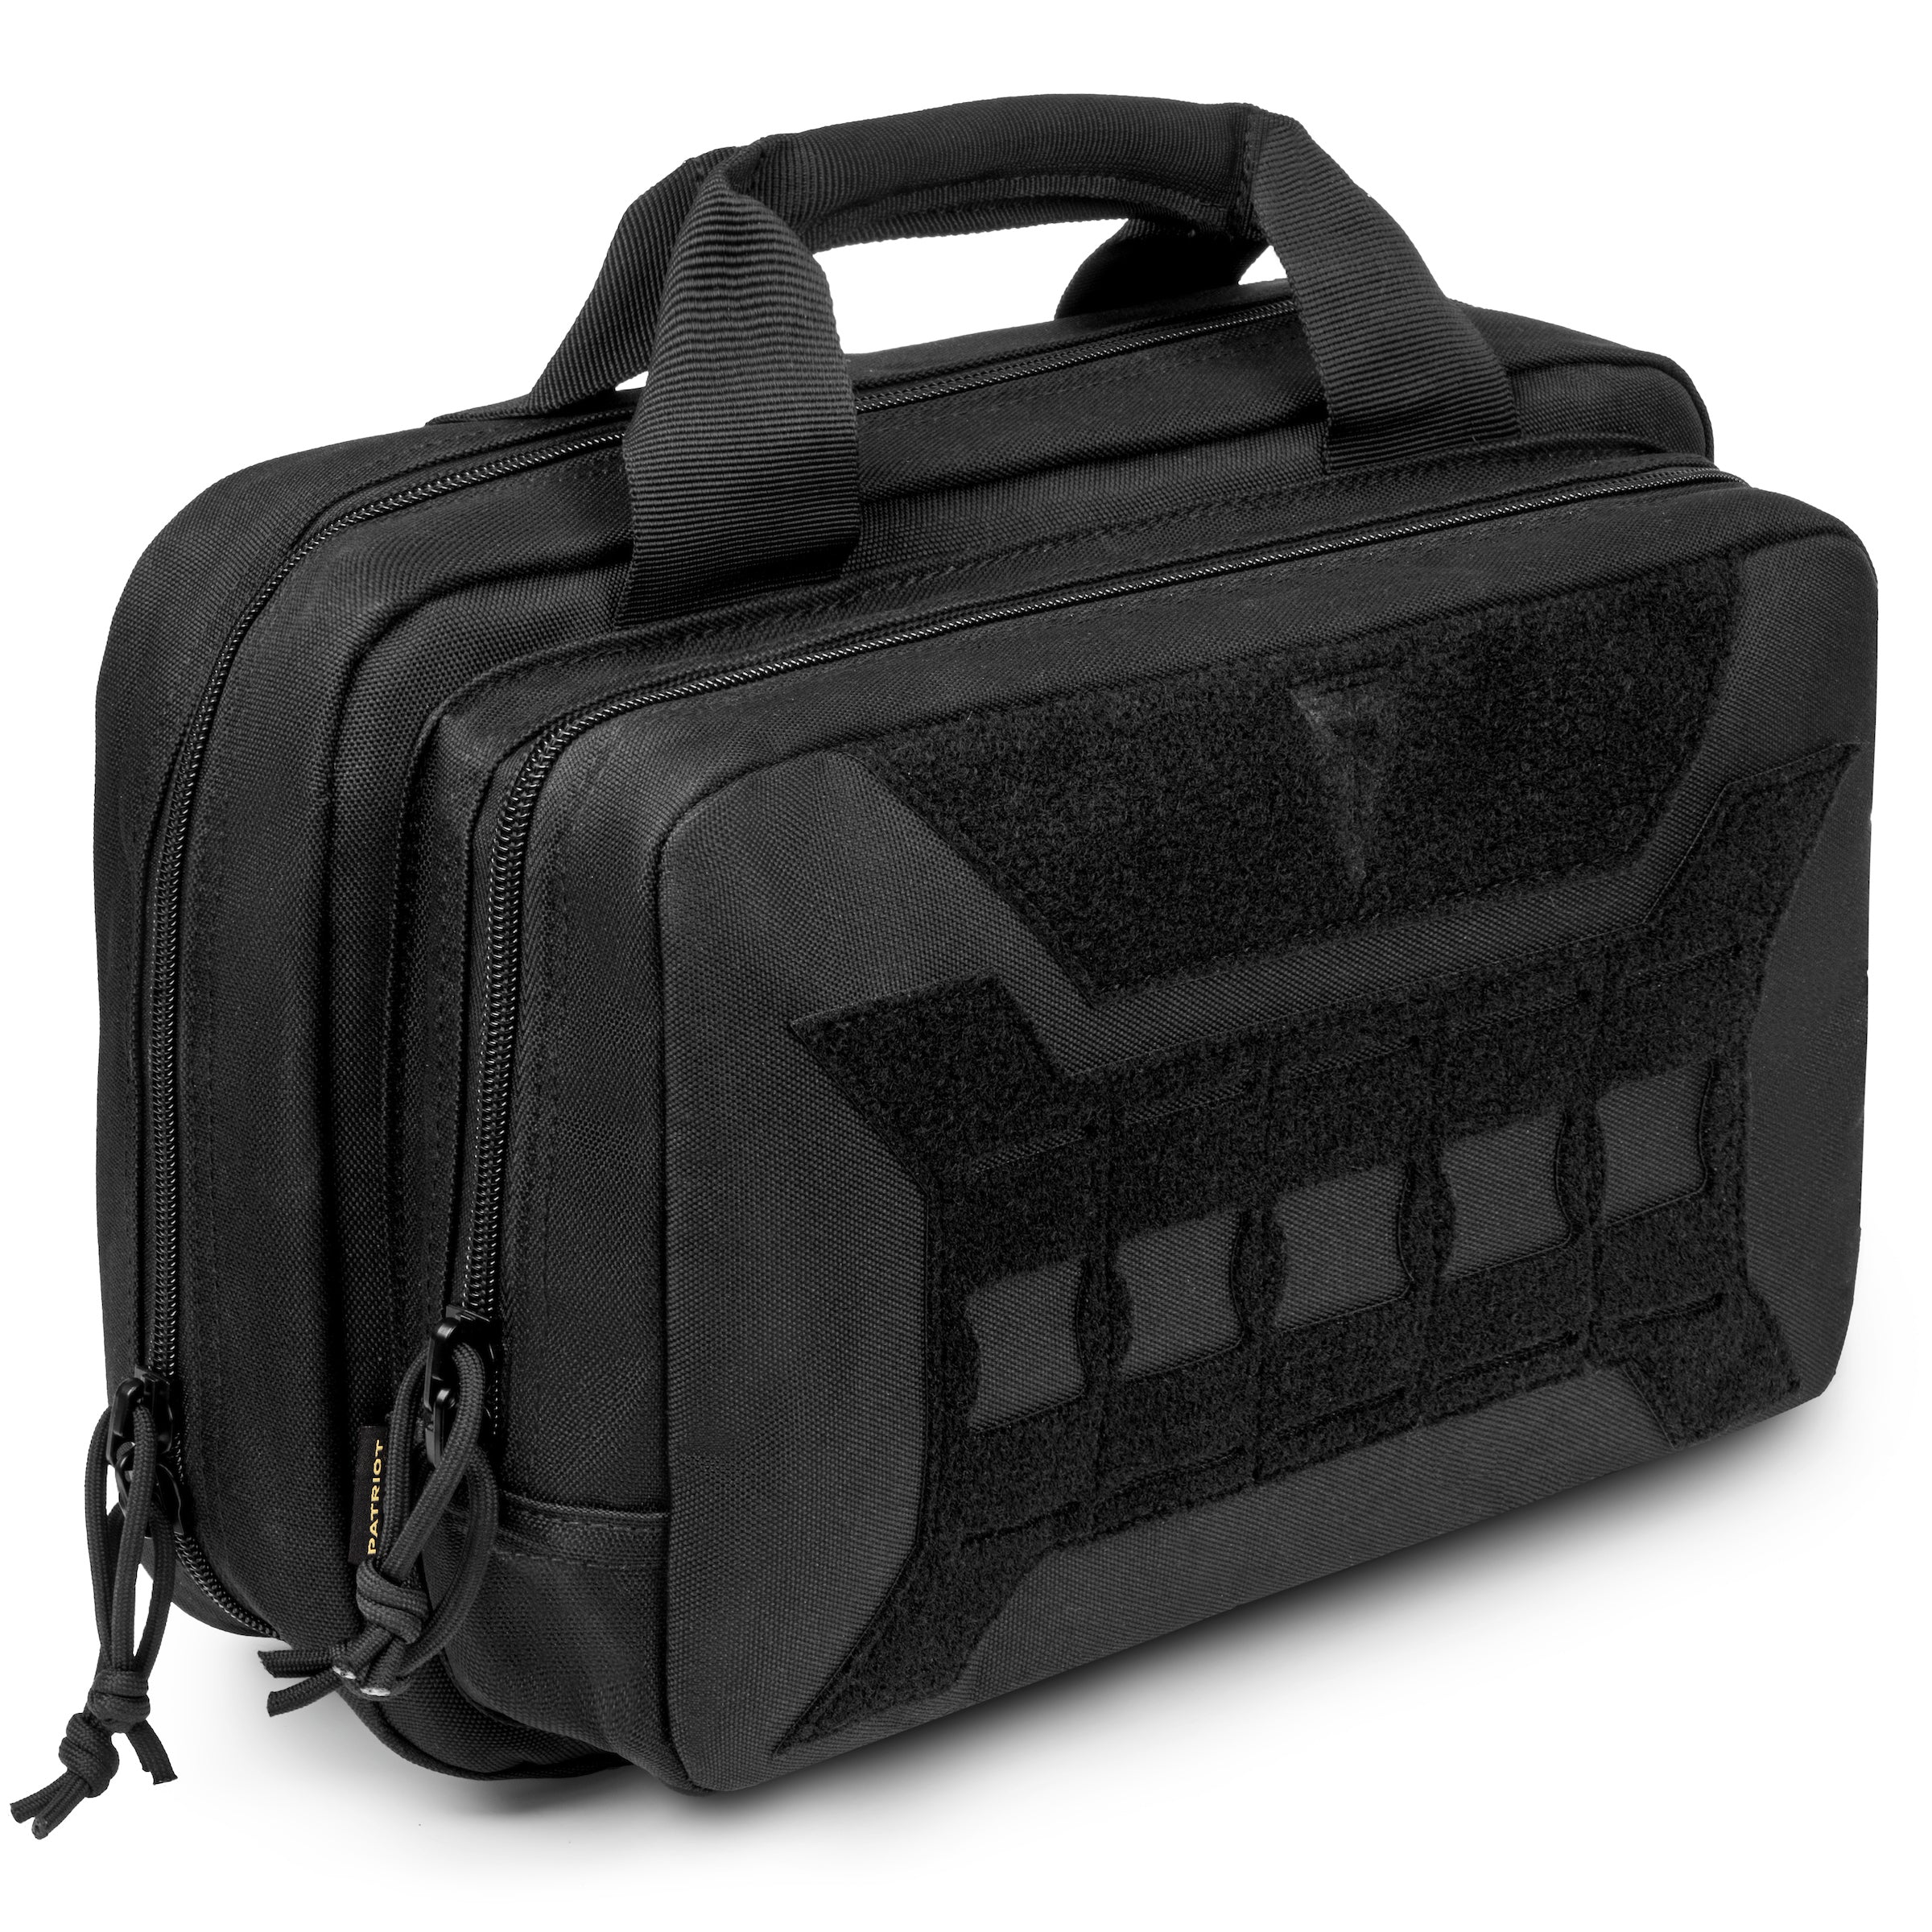 Buy Tactical Pistol Bag in Arizona, USA | Shop Now